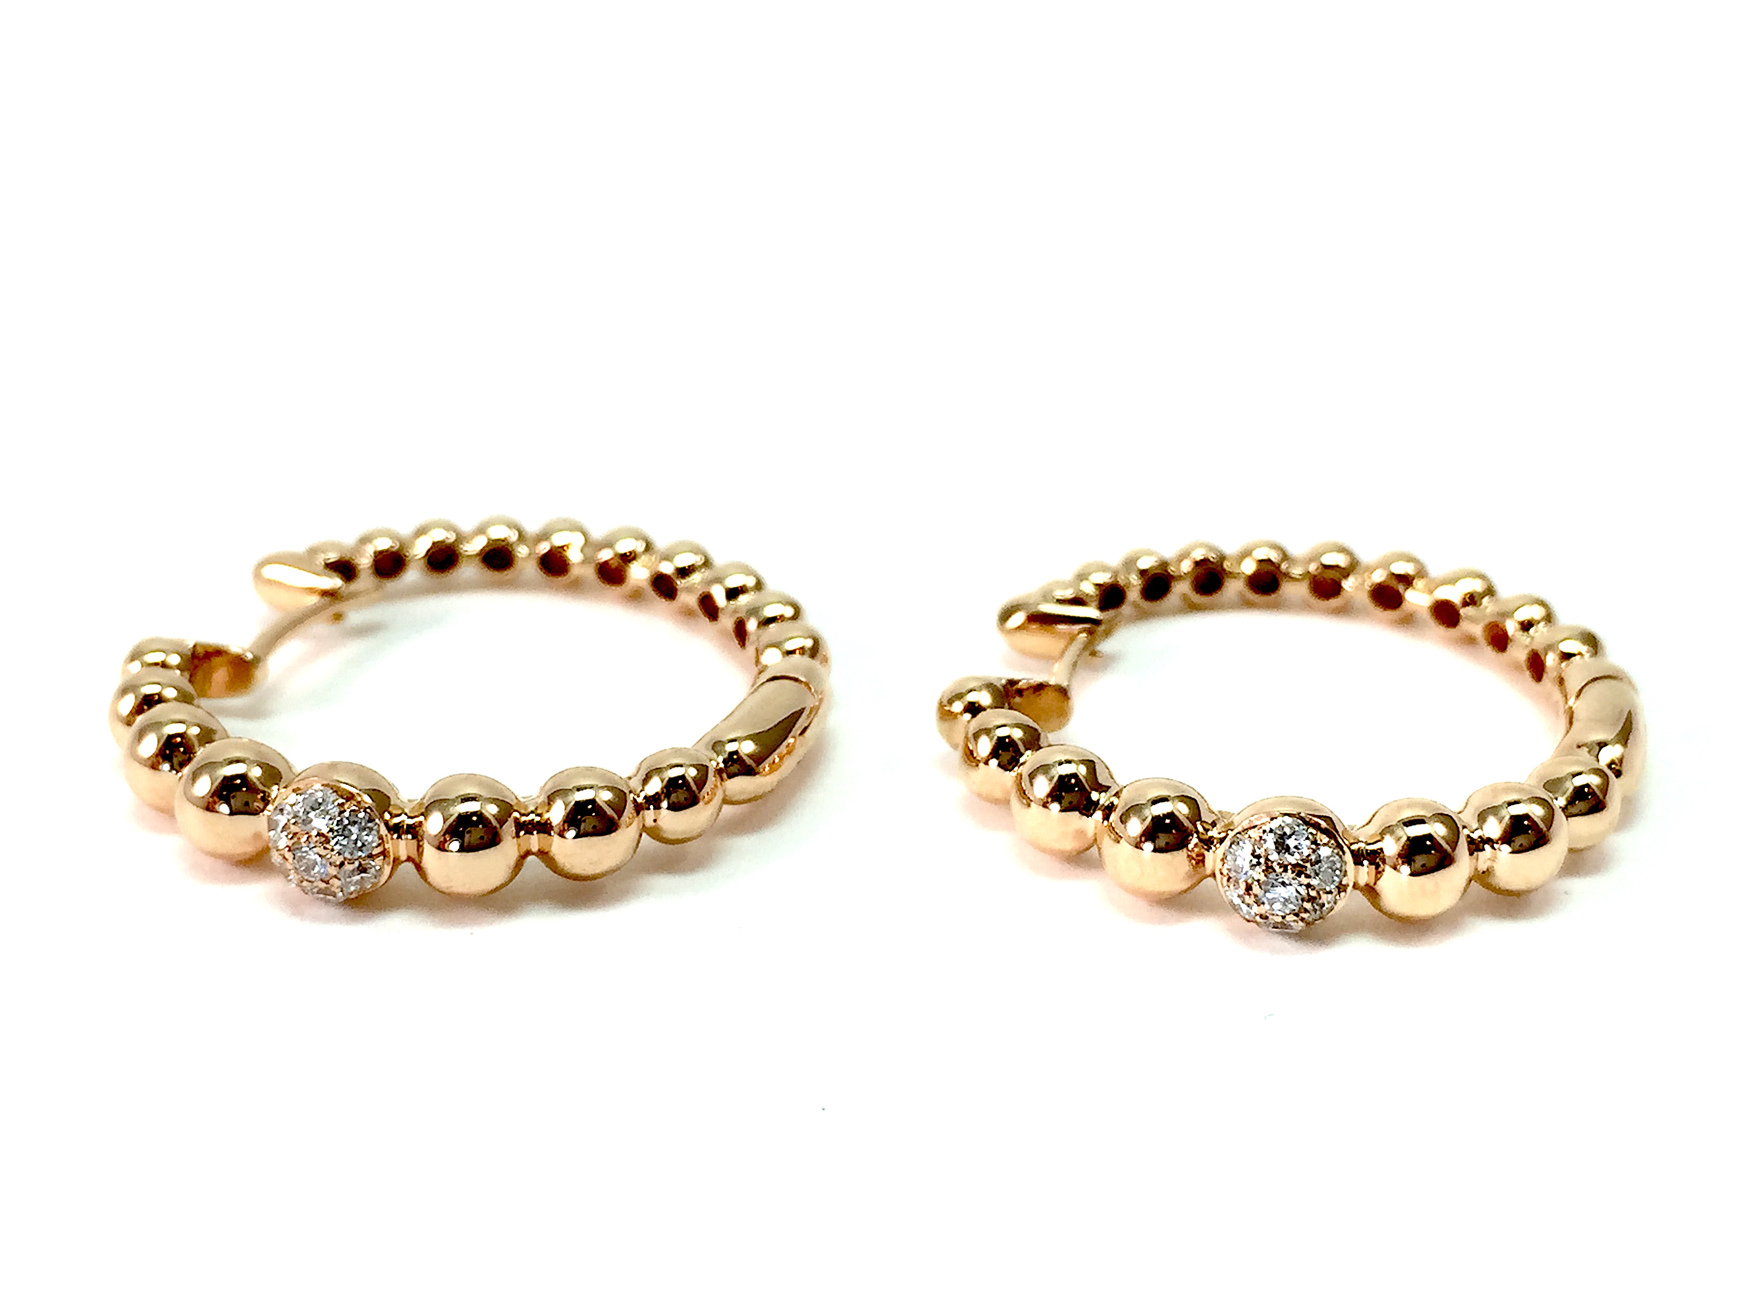 Sensi joyas jewellery Granada silver engagement18K ROSE GOLD EARRINGS WITH 0.20CTS DIAMONDS 